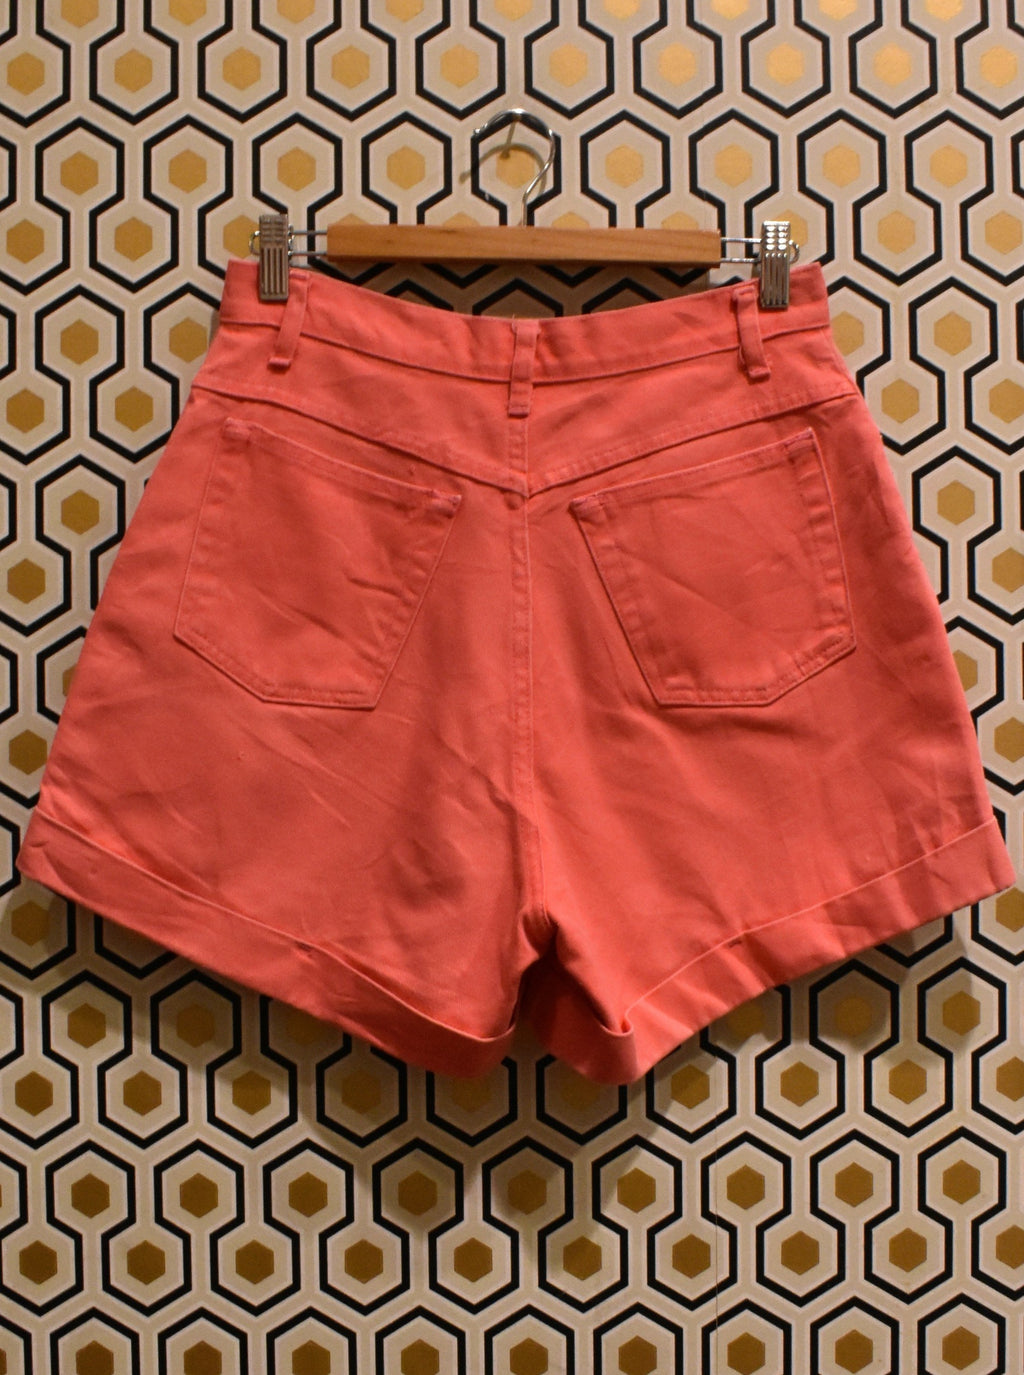 Watermelon Shorts